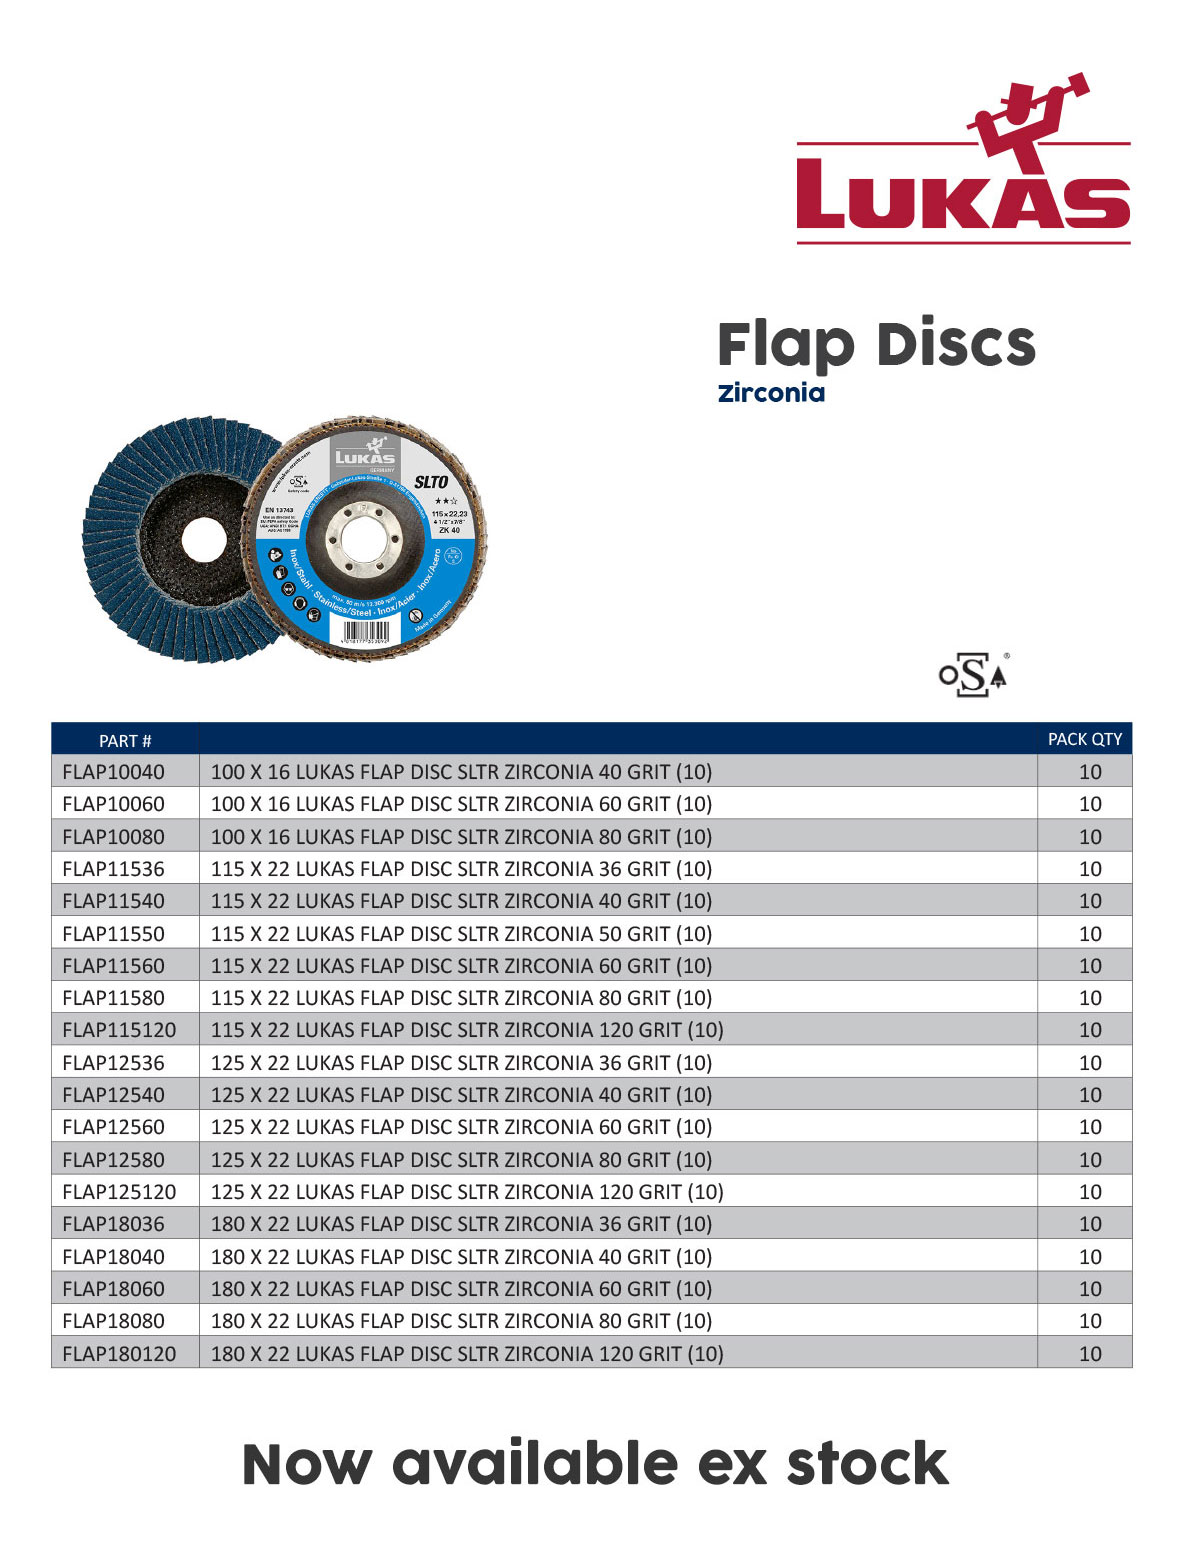 Lukas-flap-discs